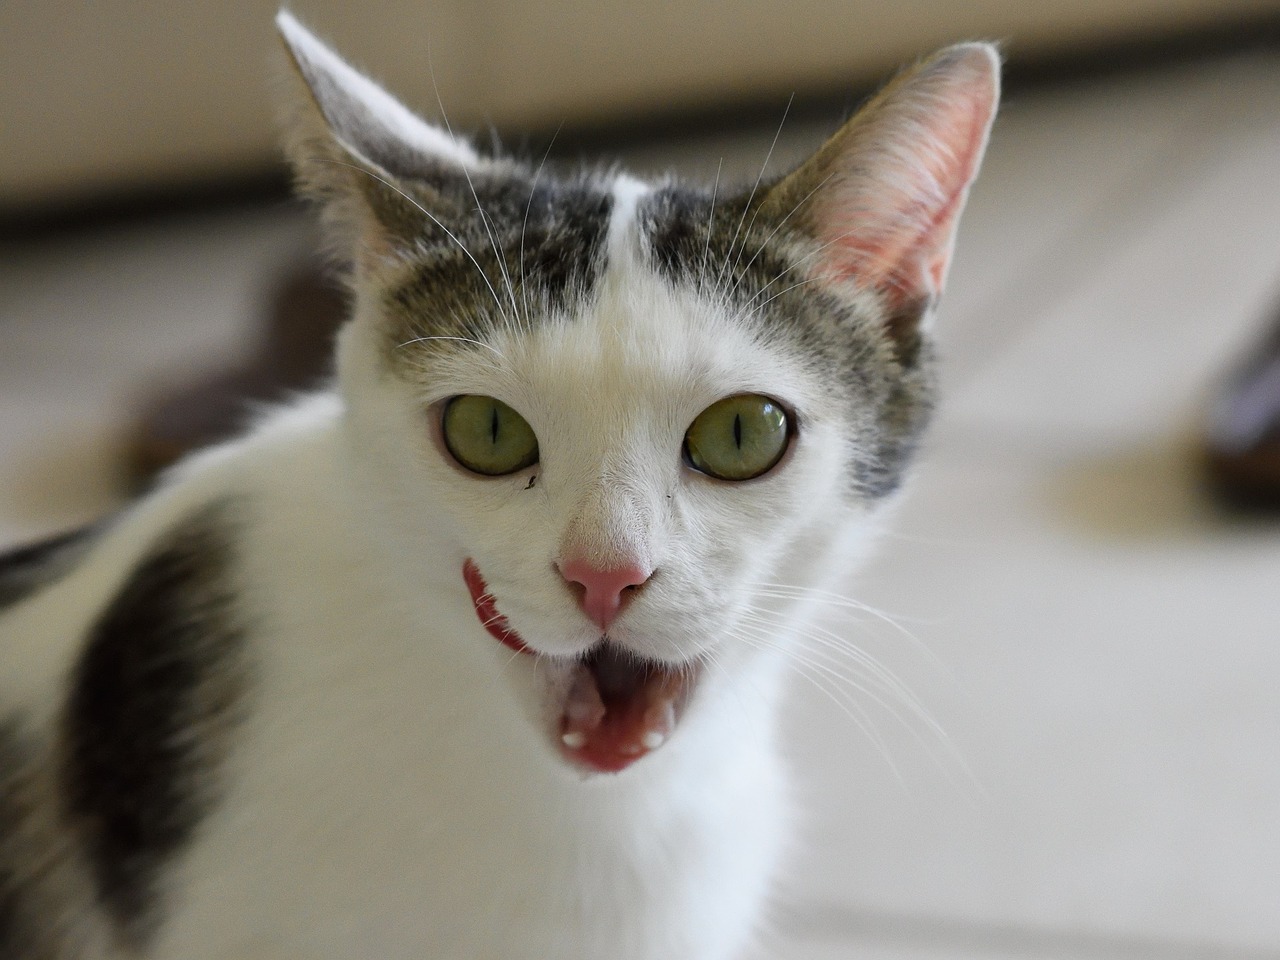 Image - cat portrait looking face close up